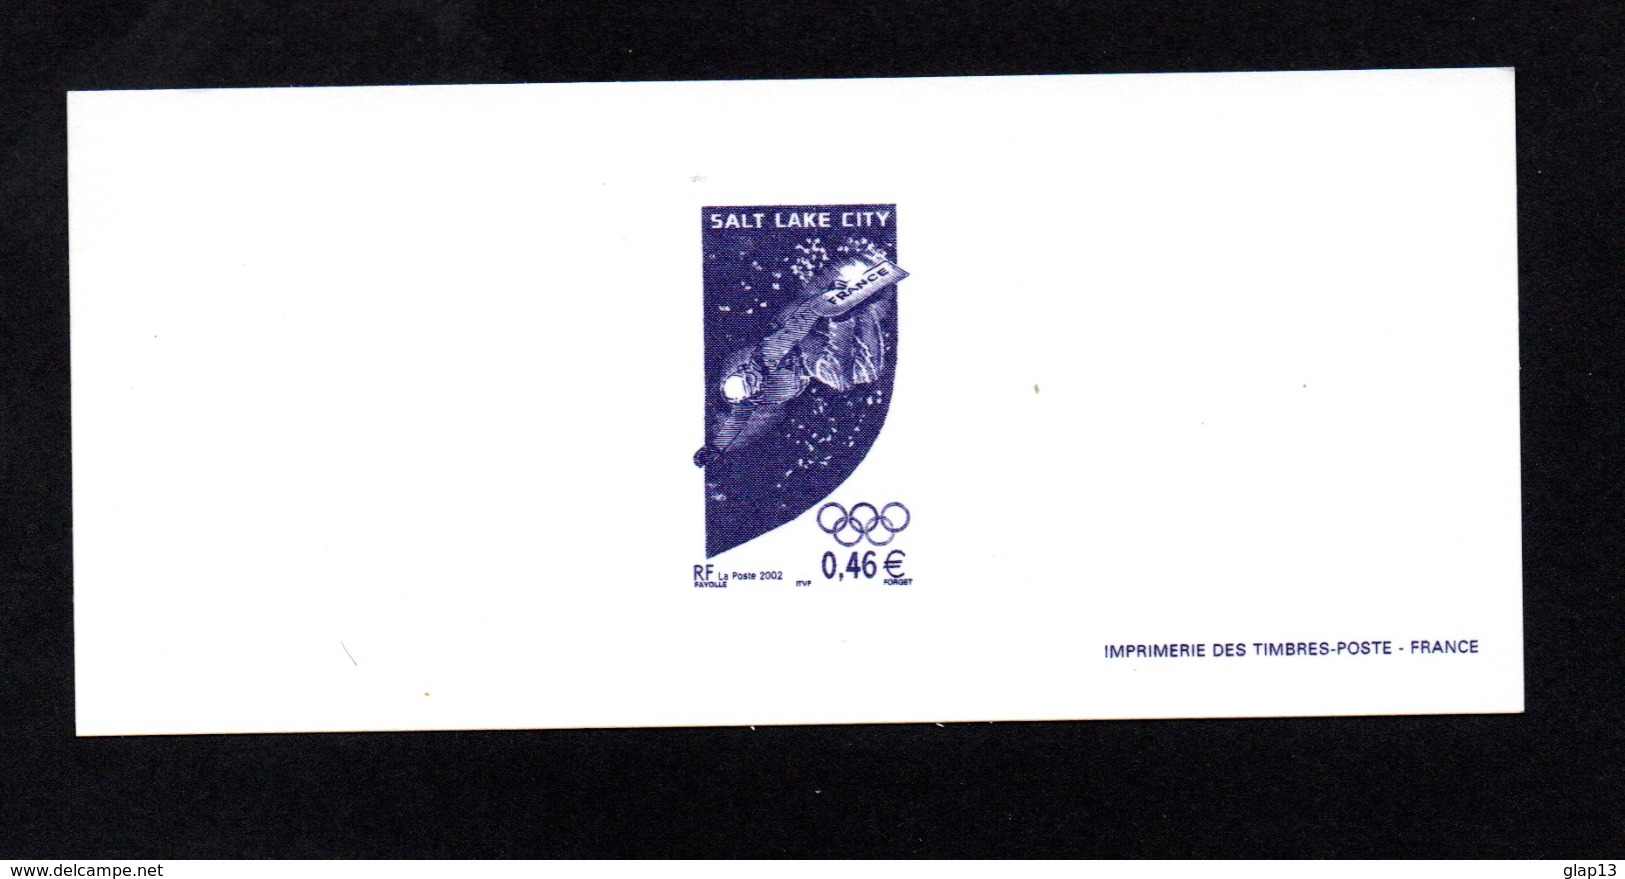 GRAVURE 2002  N°3460 SALT LAKE CITY - Documents Of Postal Services